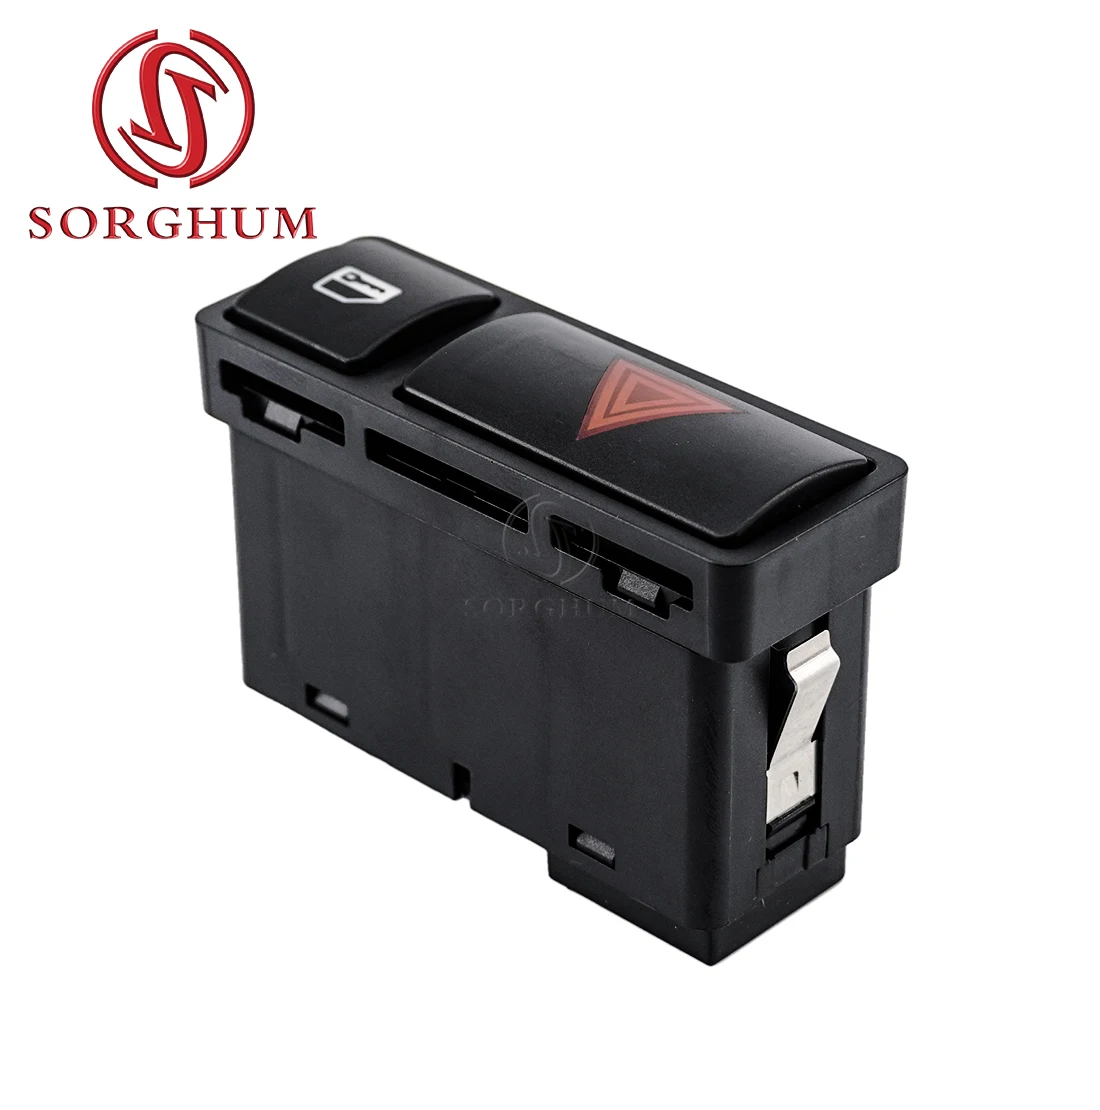 

SORGHUM 61318368920 For BMW E46 E53 E85 E86 Z4 X5 2000-2006 M3 325 3S Roadste Emergency Flash Light Switch Hazard Warming Button